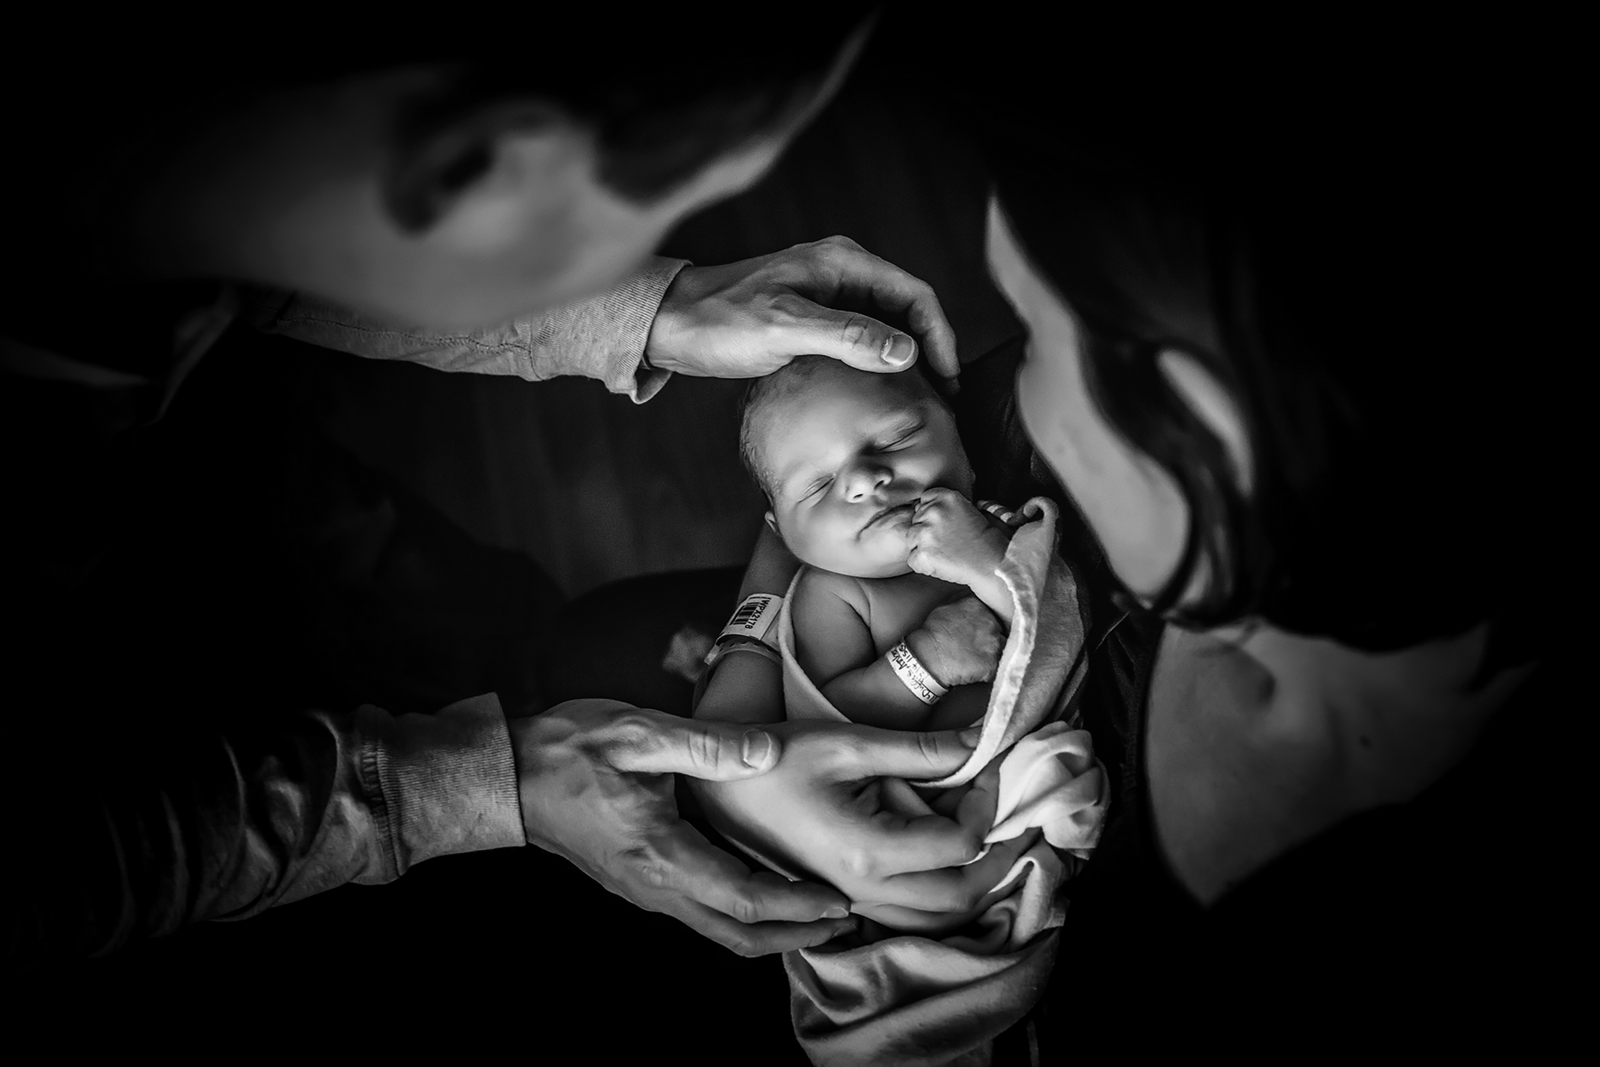 birth photographer, columbus, ga, atlanta, postpartum, mom and dad holding baby, ker-fox photography_9541-2